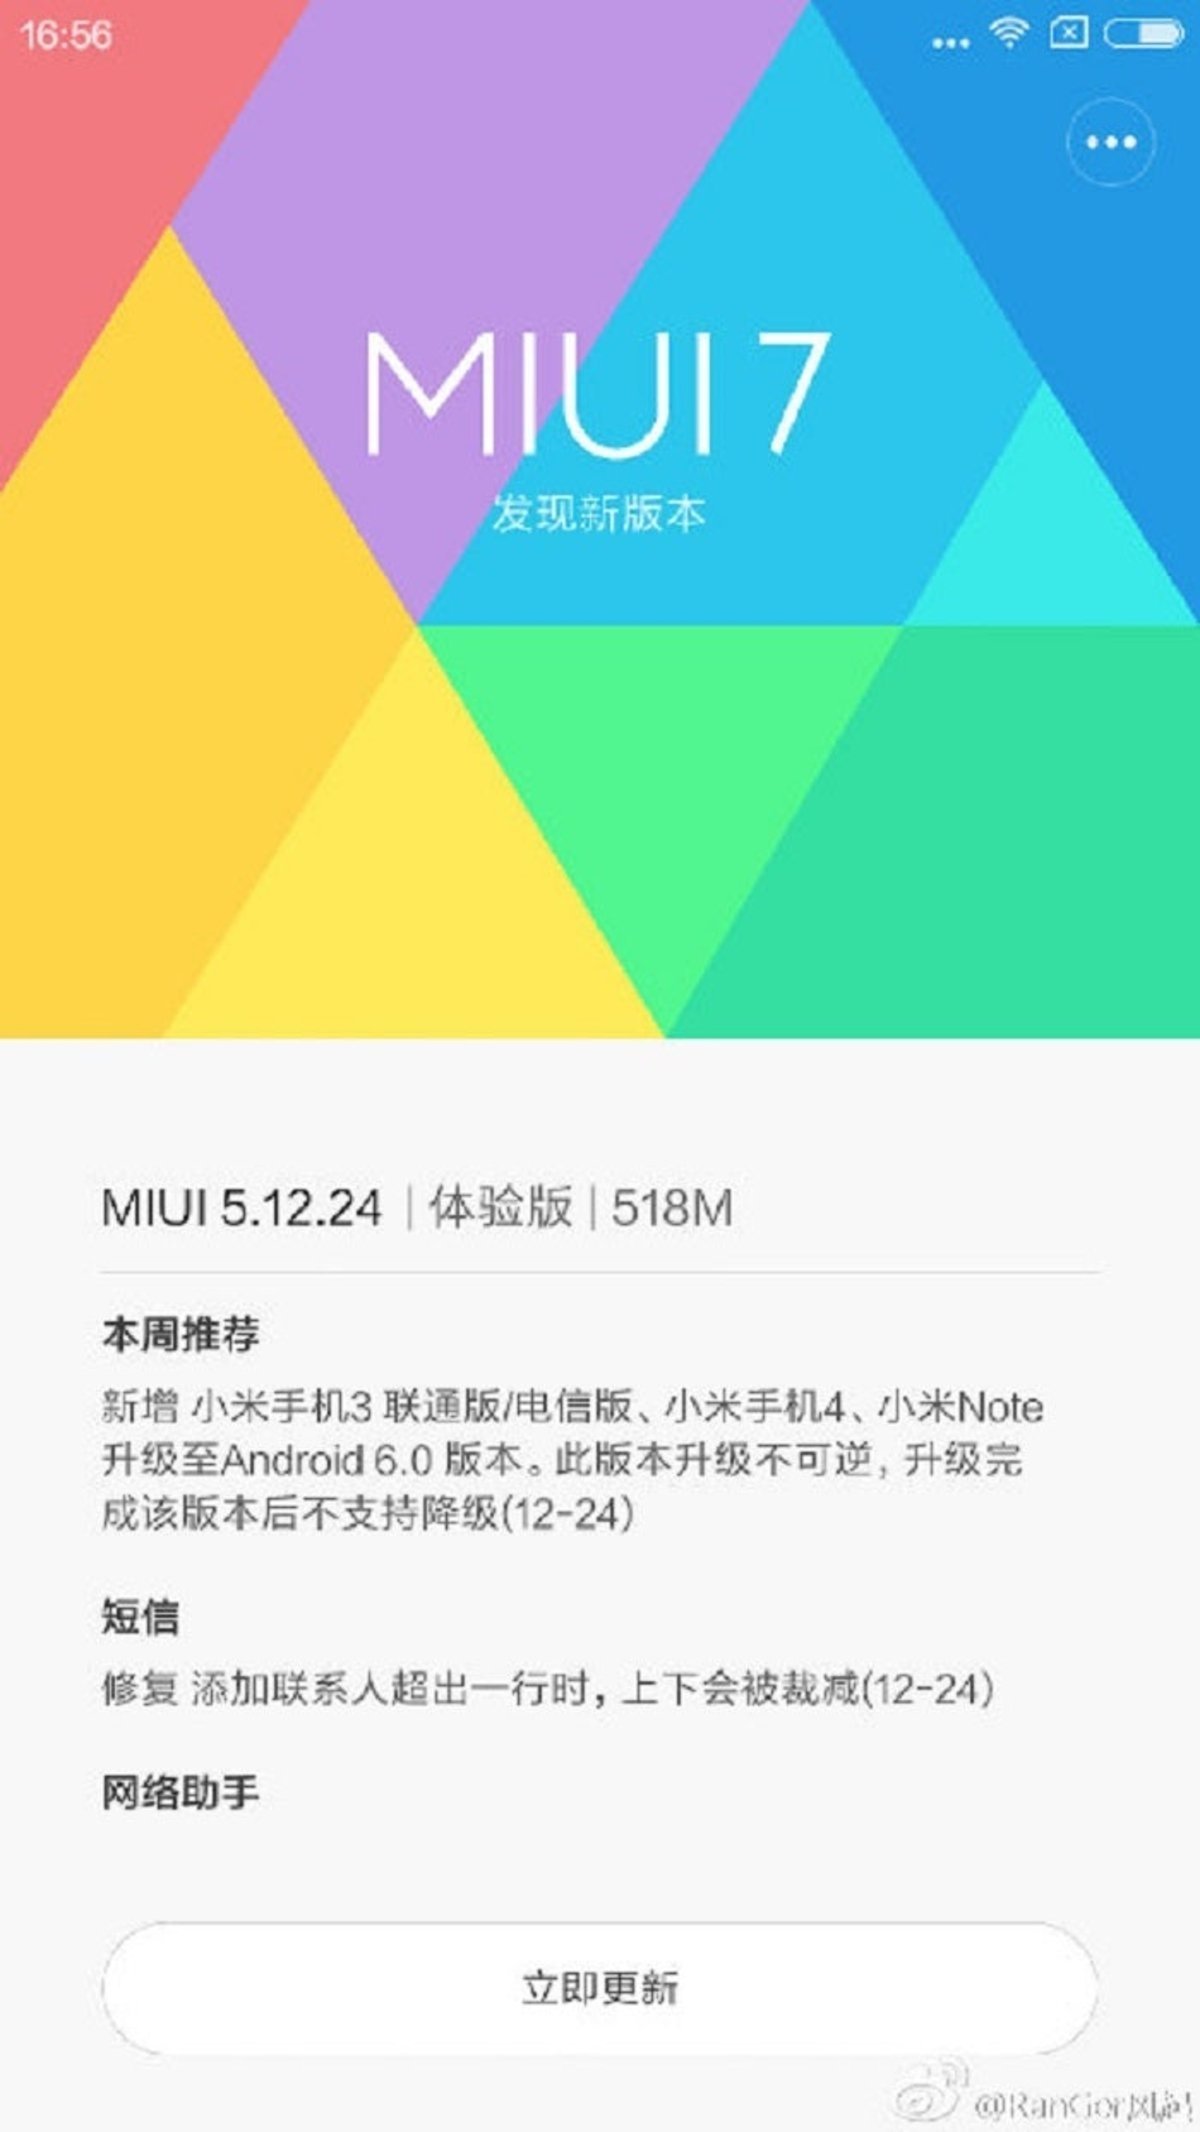 Xiaomi-MIUI-7-Android-6.0-Marshmallow-KK